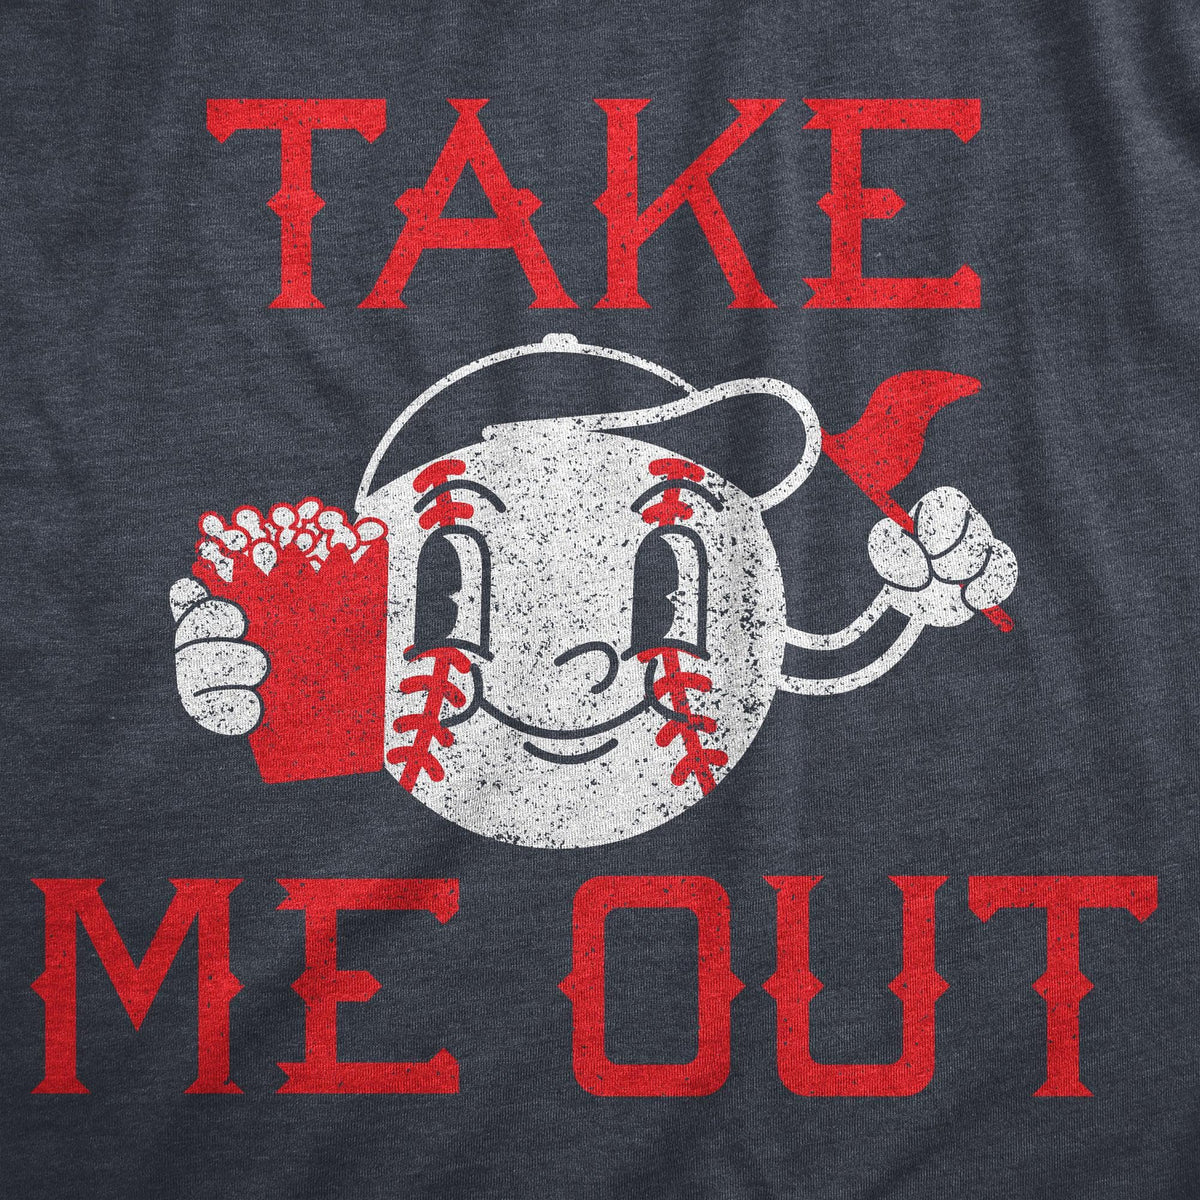 Take Me Out Men&#39;s Tshirt  -  Crazy Dog T-Shirts